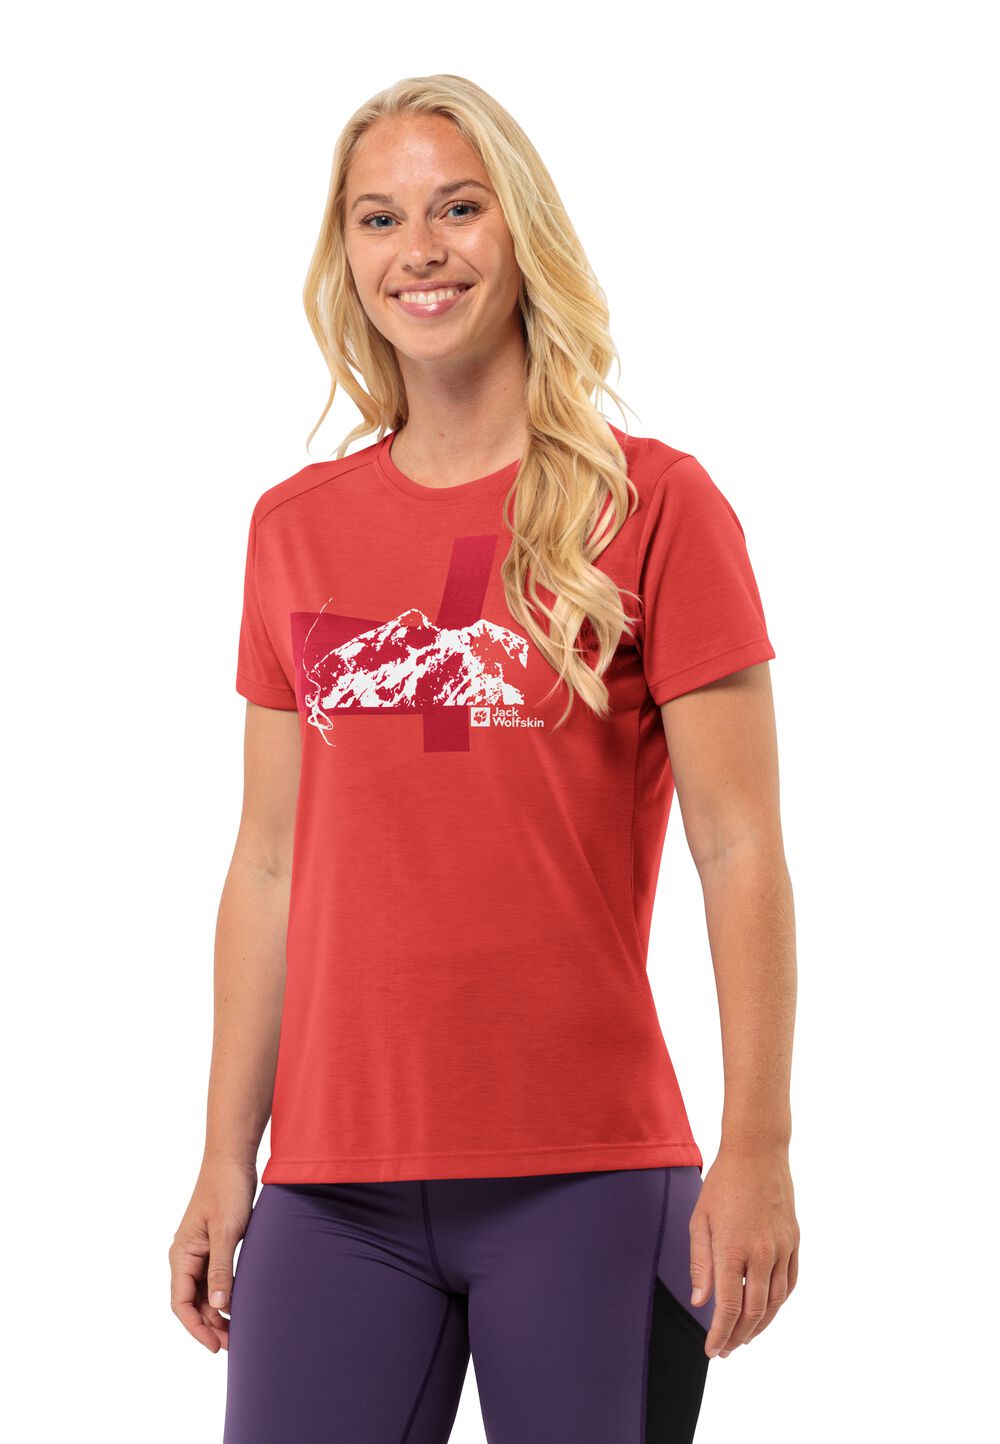 Jack Wolfskin Vonnan S S Graphic T-Shirt Women Functioneel shirt Dames S rood vibrant red